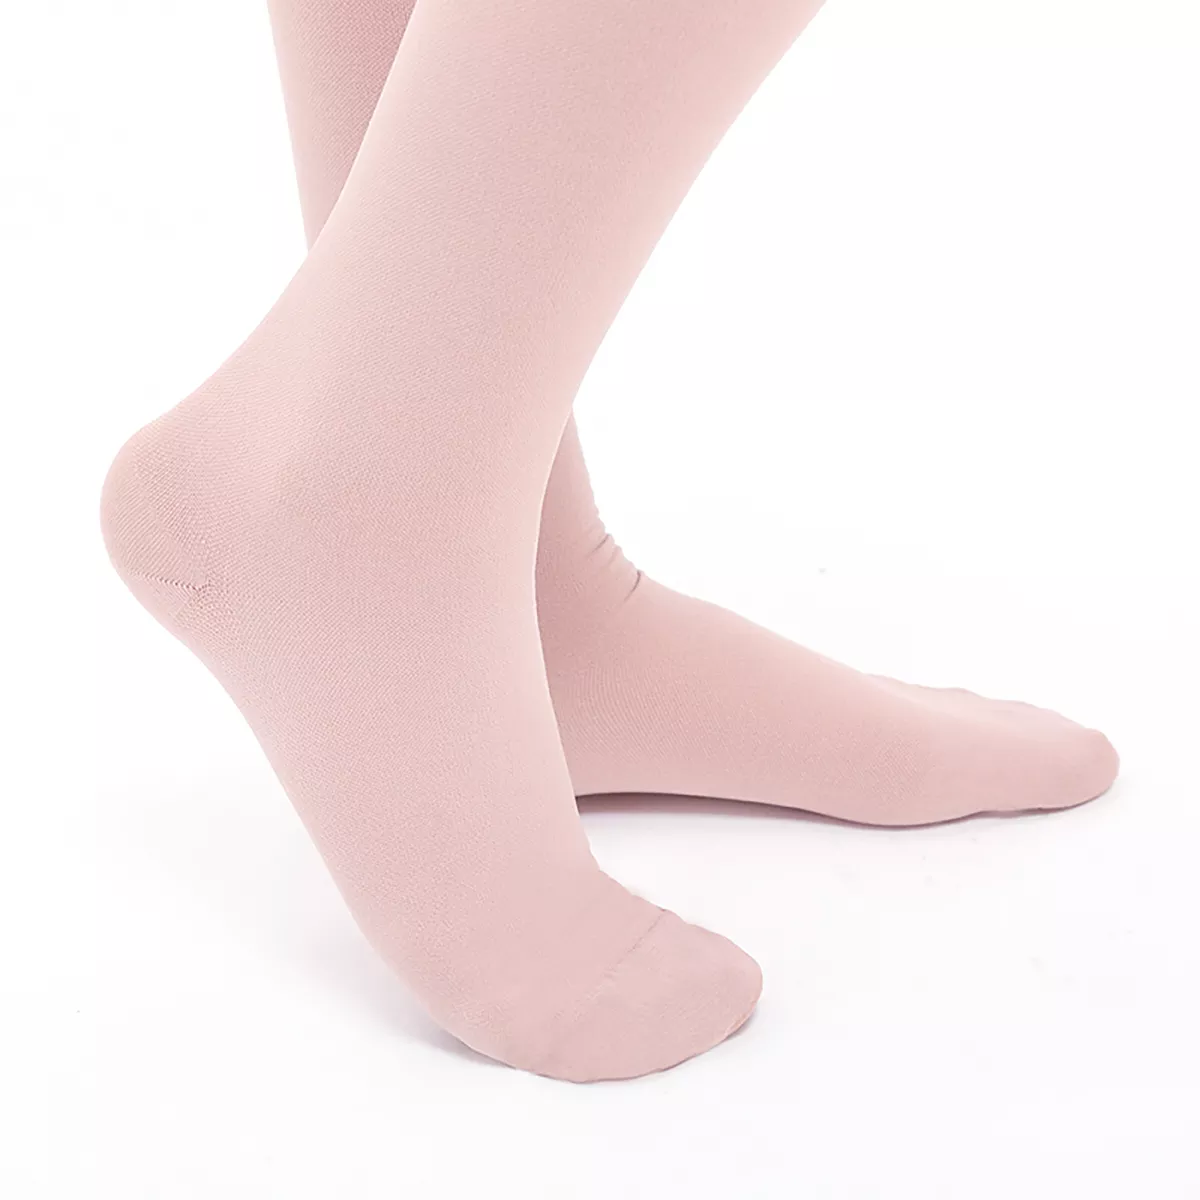 Varcoh ® 8 -15 mmHg Men Thigh High Closed Toe Compression Socks Beige